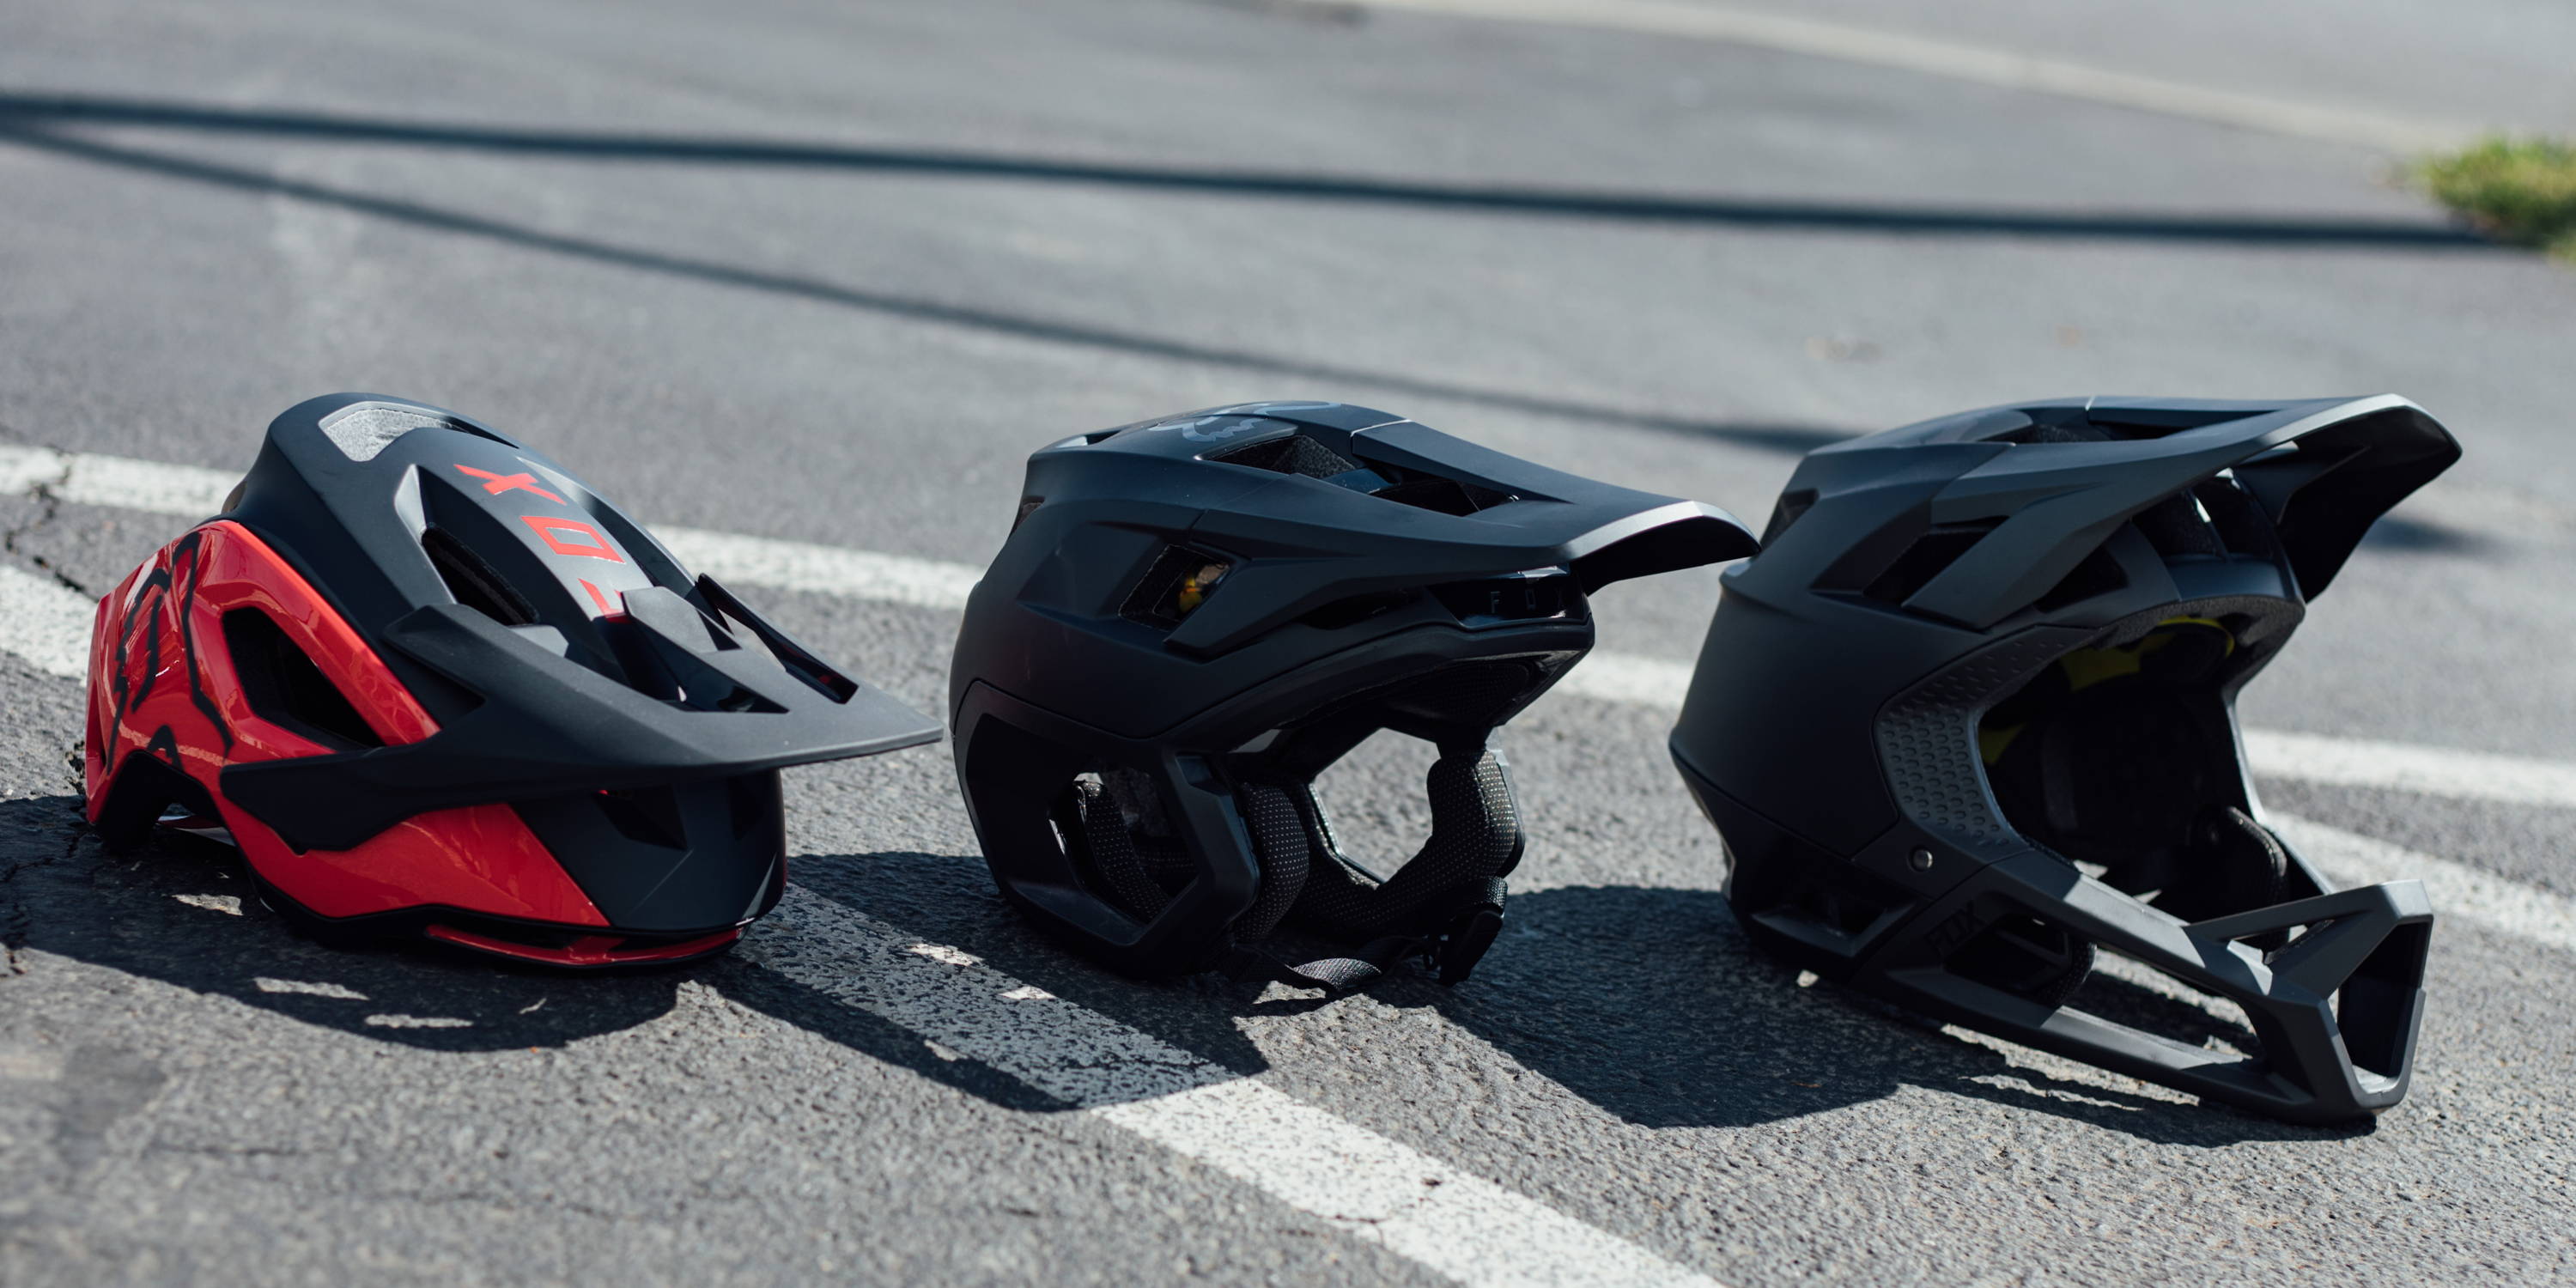 Fox Racing Dropframe Pro Downhill MTB Bicycle Helmet Two Tone Dark Indigo Medium